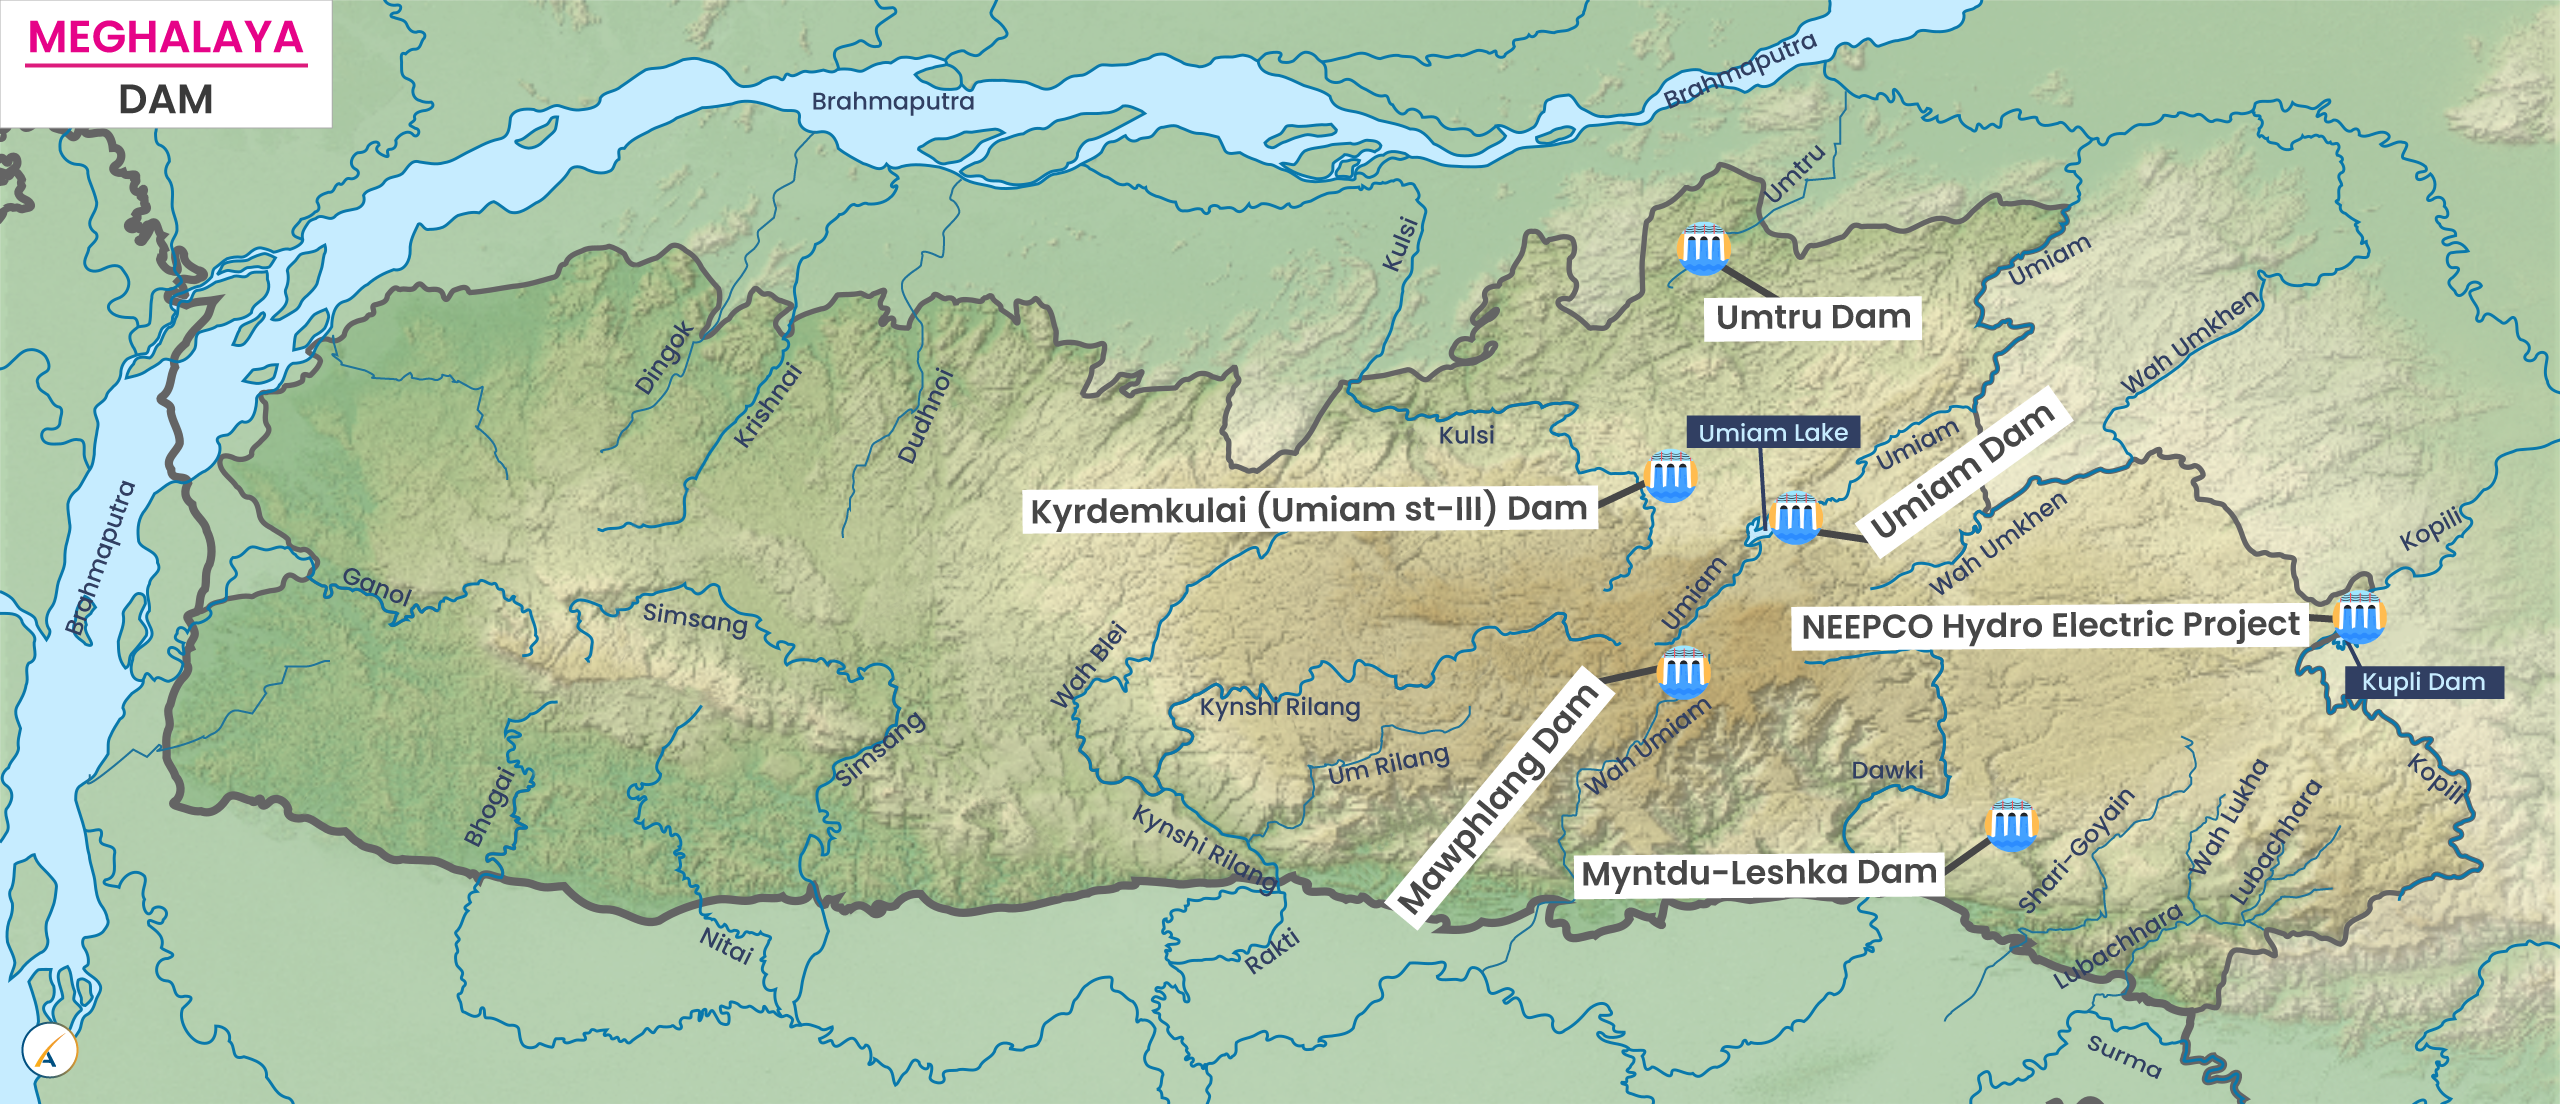 Major Dams in Meghalaya (Map)